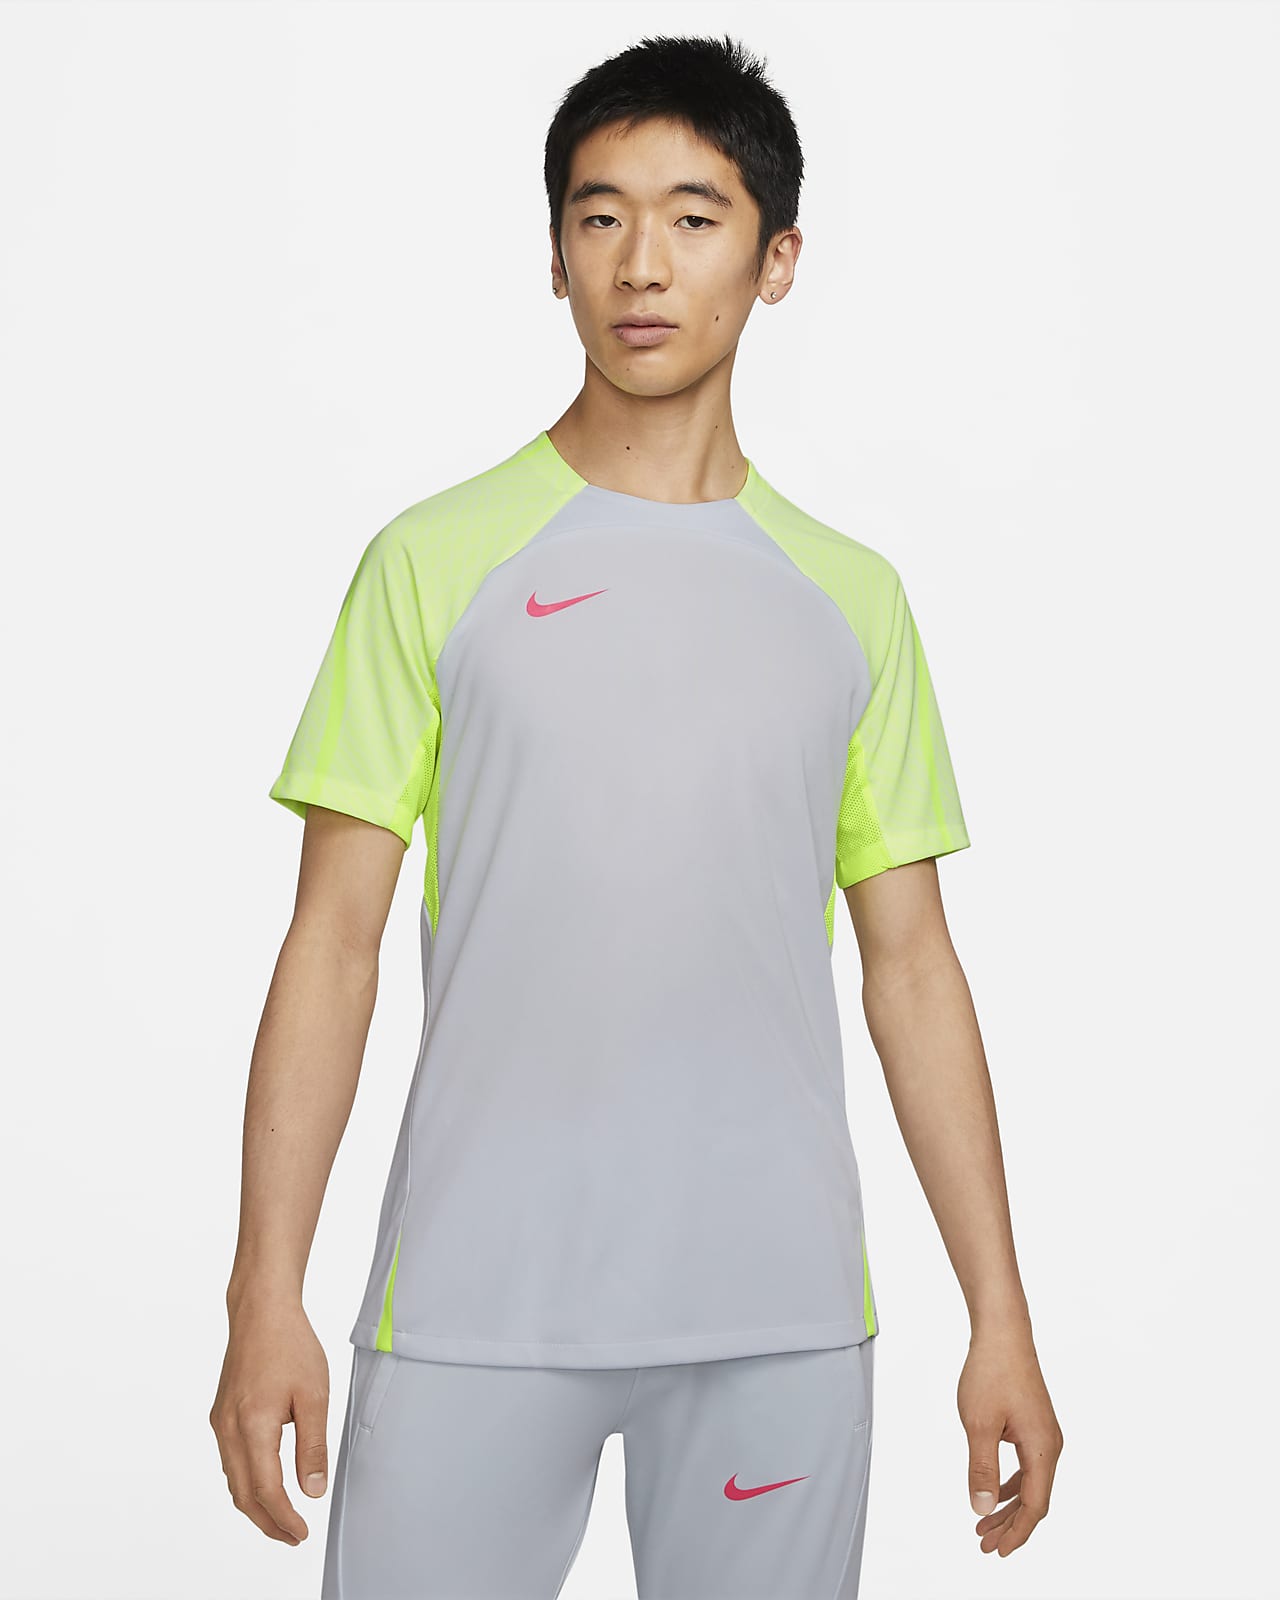 Nike Dri-FIT Strike Men's Short-Sleeve Football Top. ID